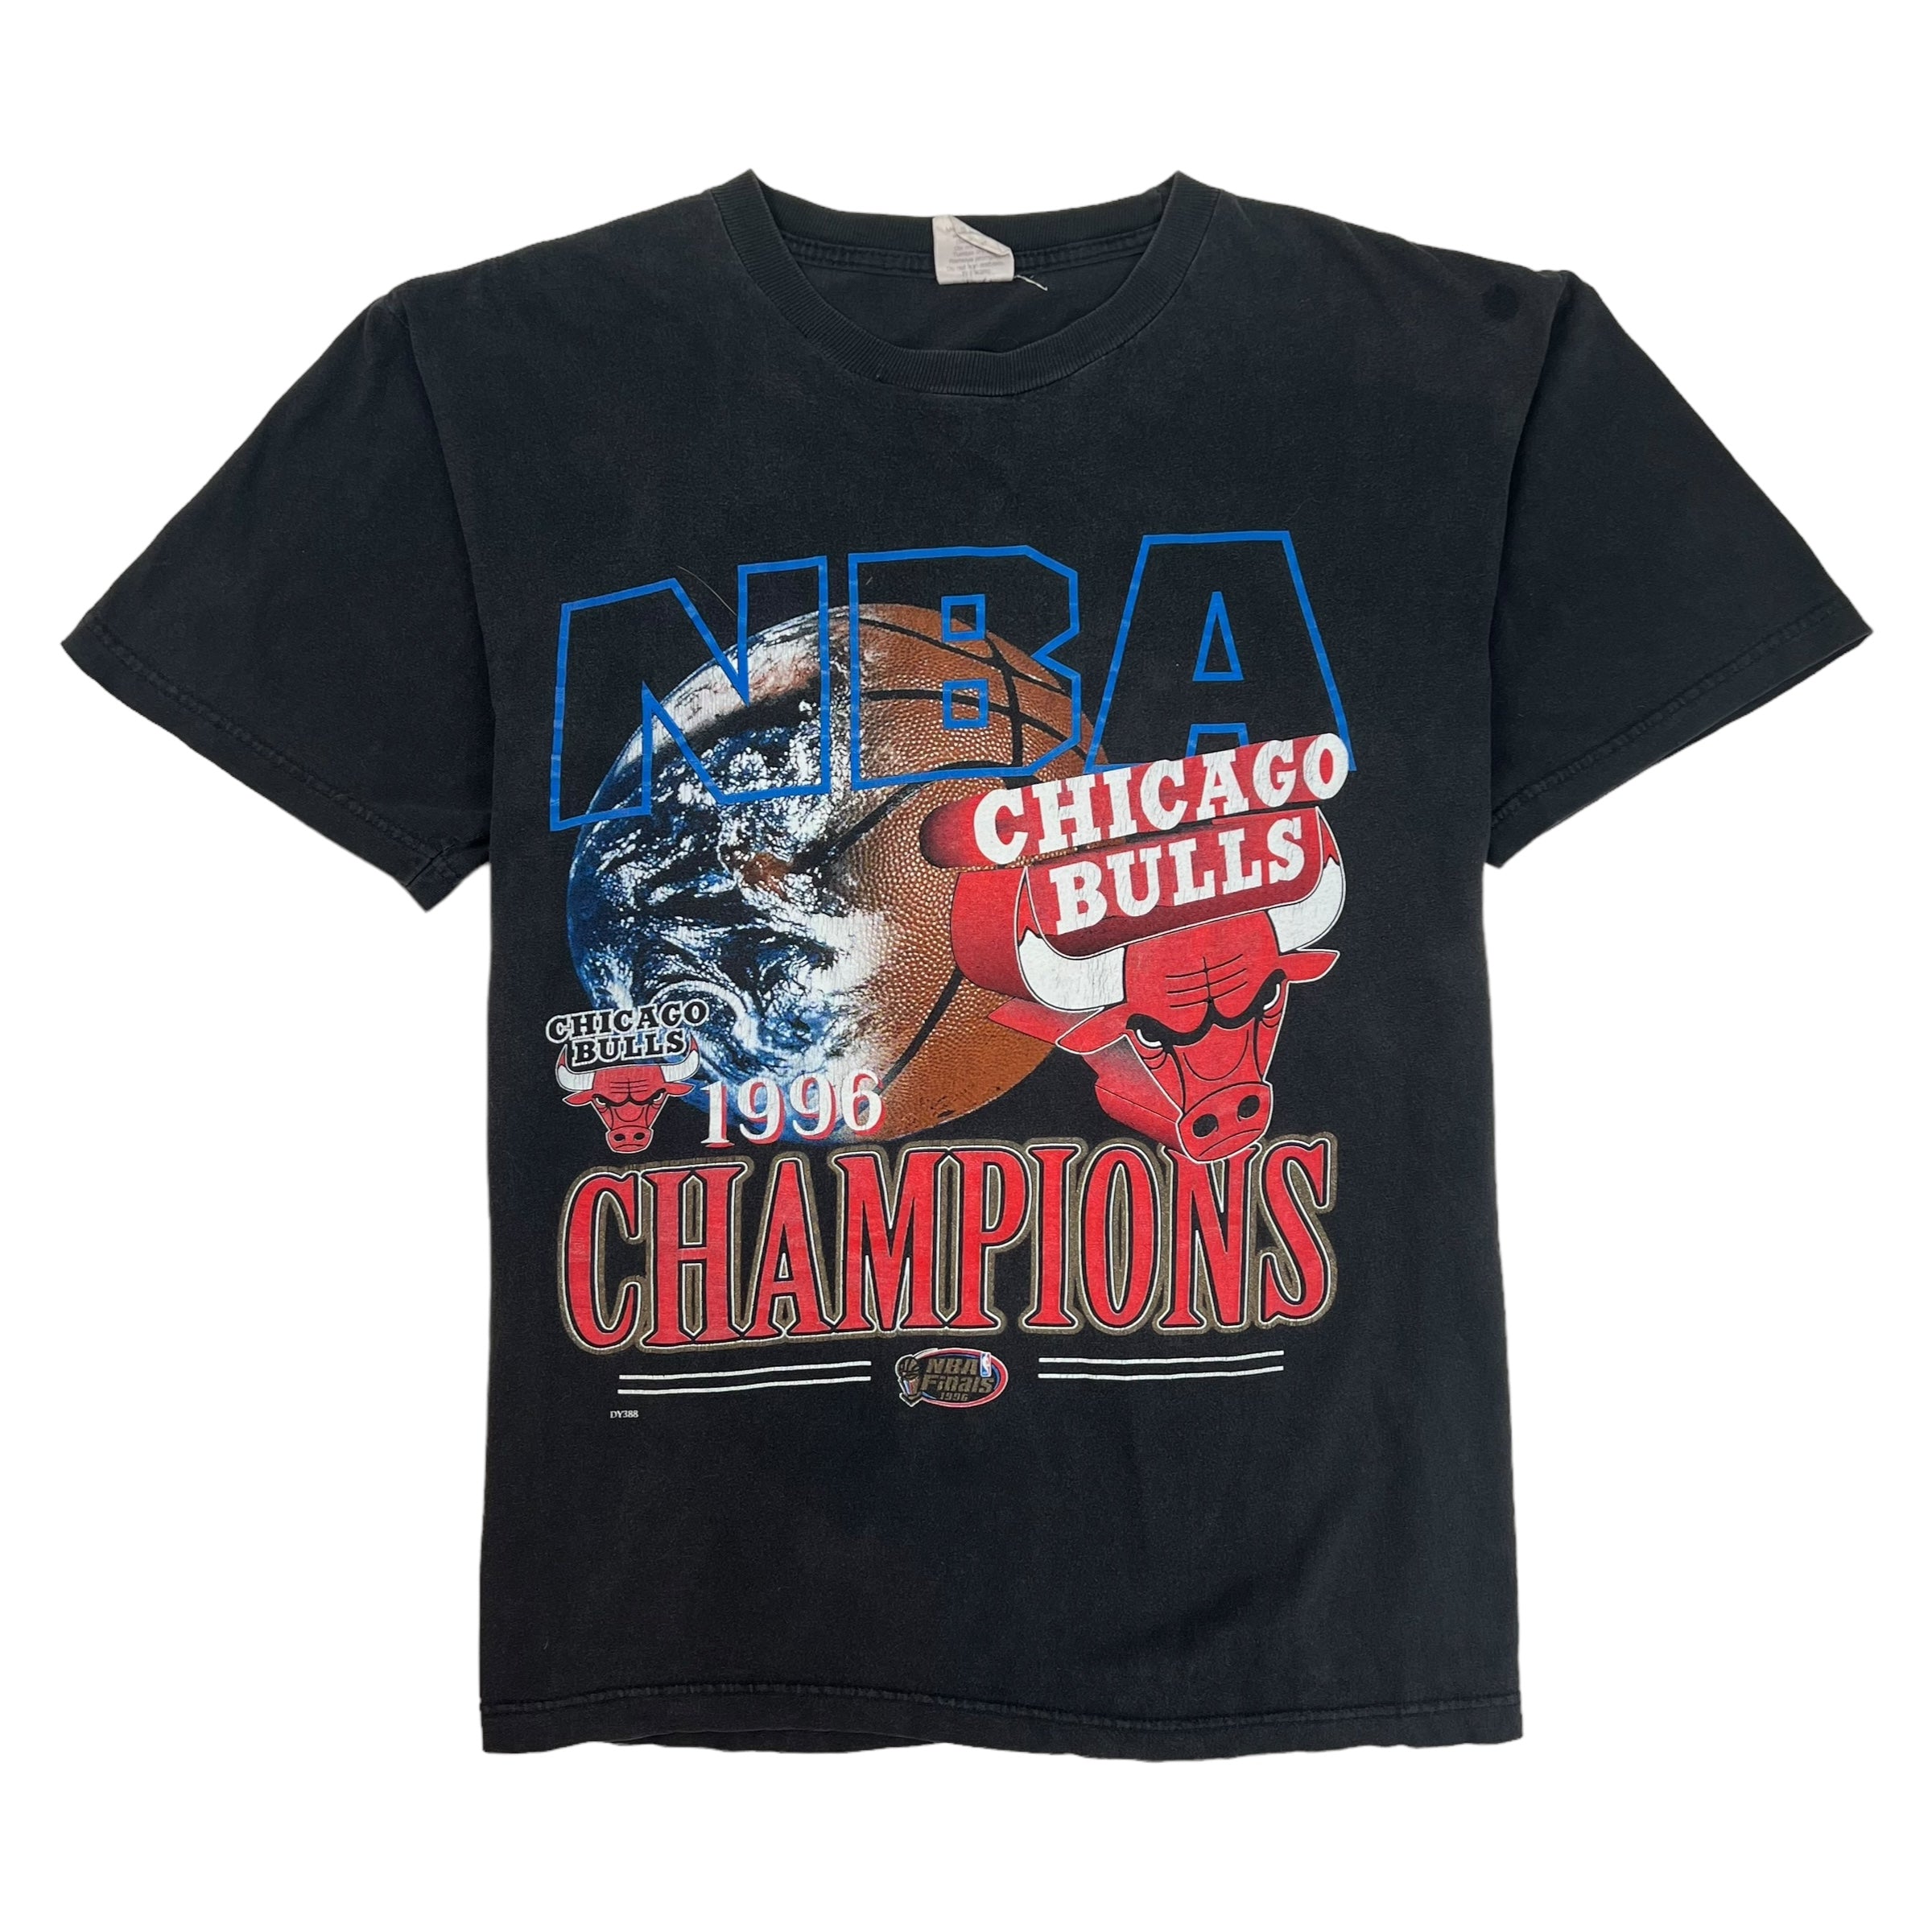 Vintage Chicago Bulls ‘96 Champions Tee Black